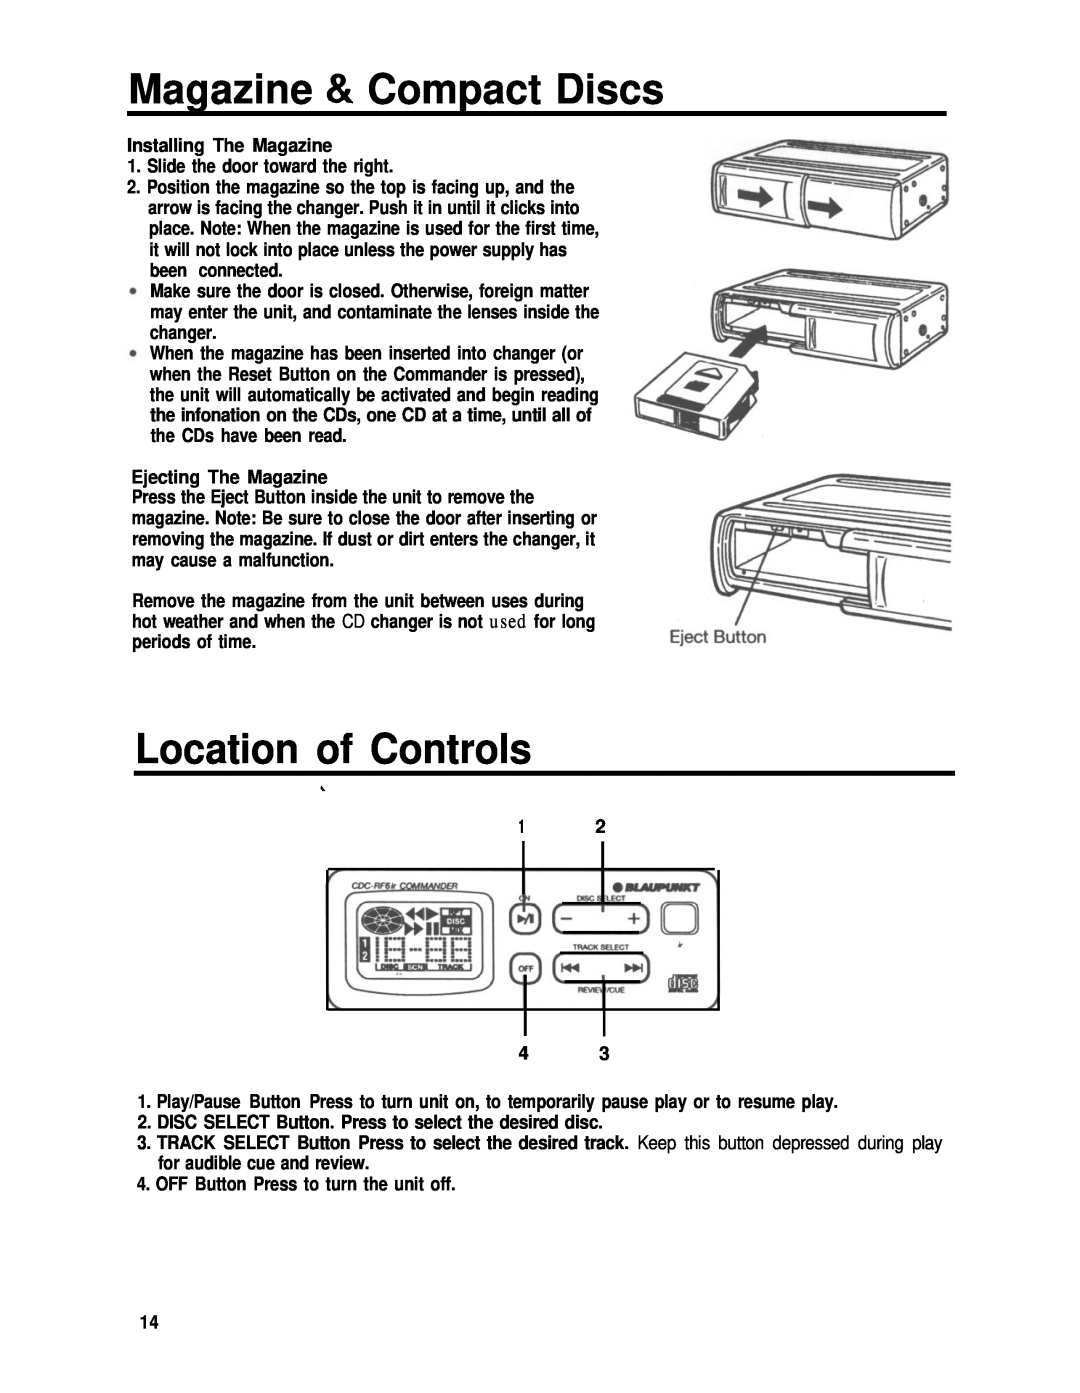 Blaupunkt CDC-RF6IR manual Location of Controls, Magazine & Compact Discs 